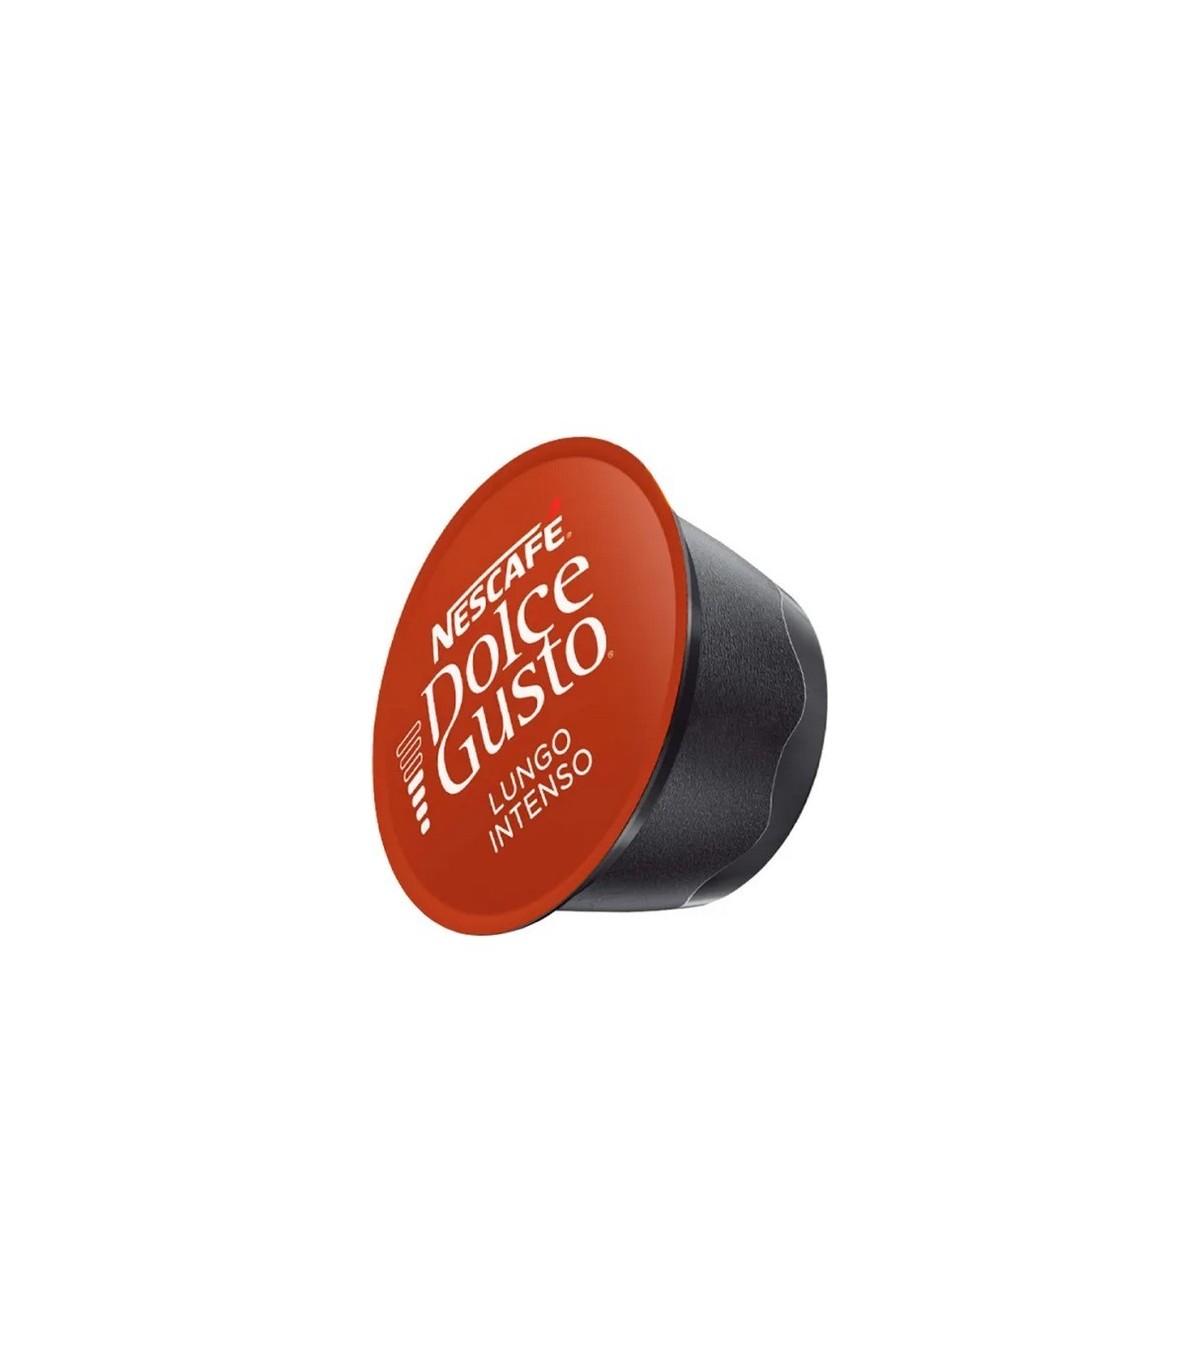 180 Nescafé Dolce Gusto Espresso Intenso capsules with Free Shipping